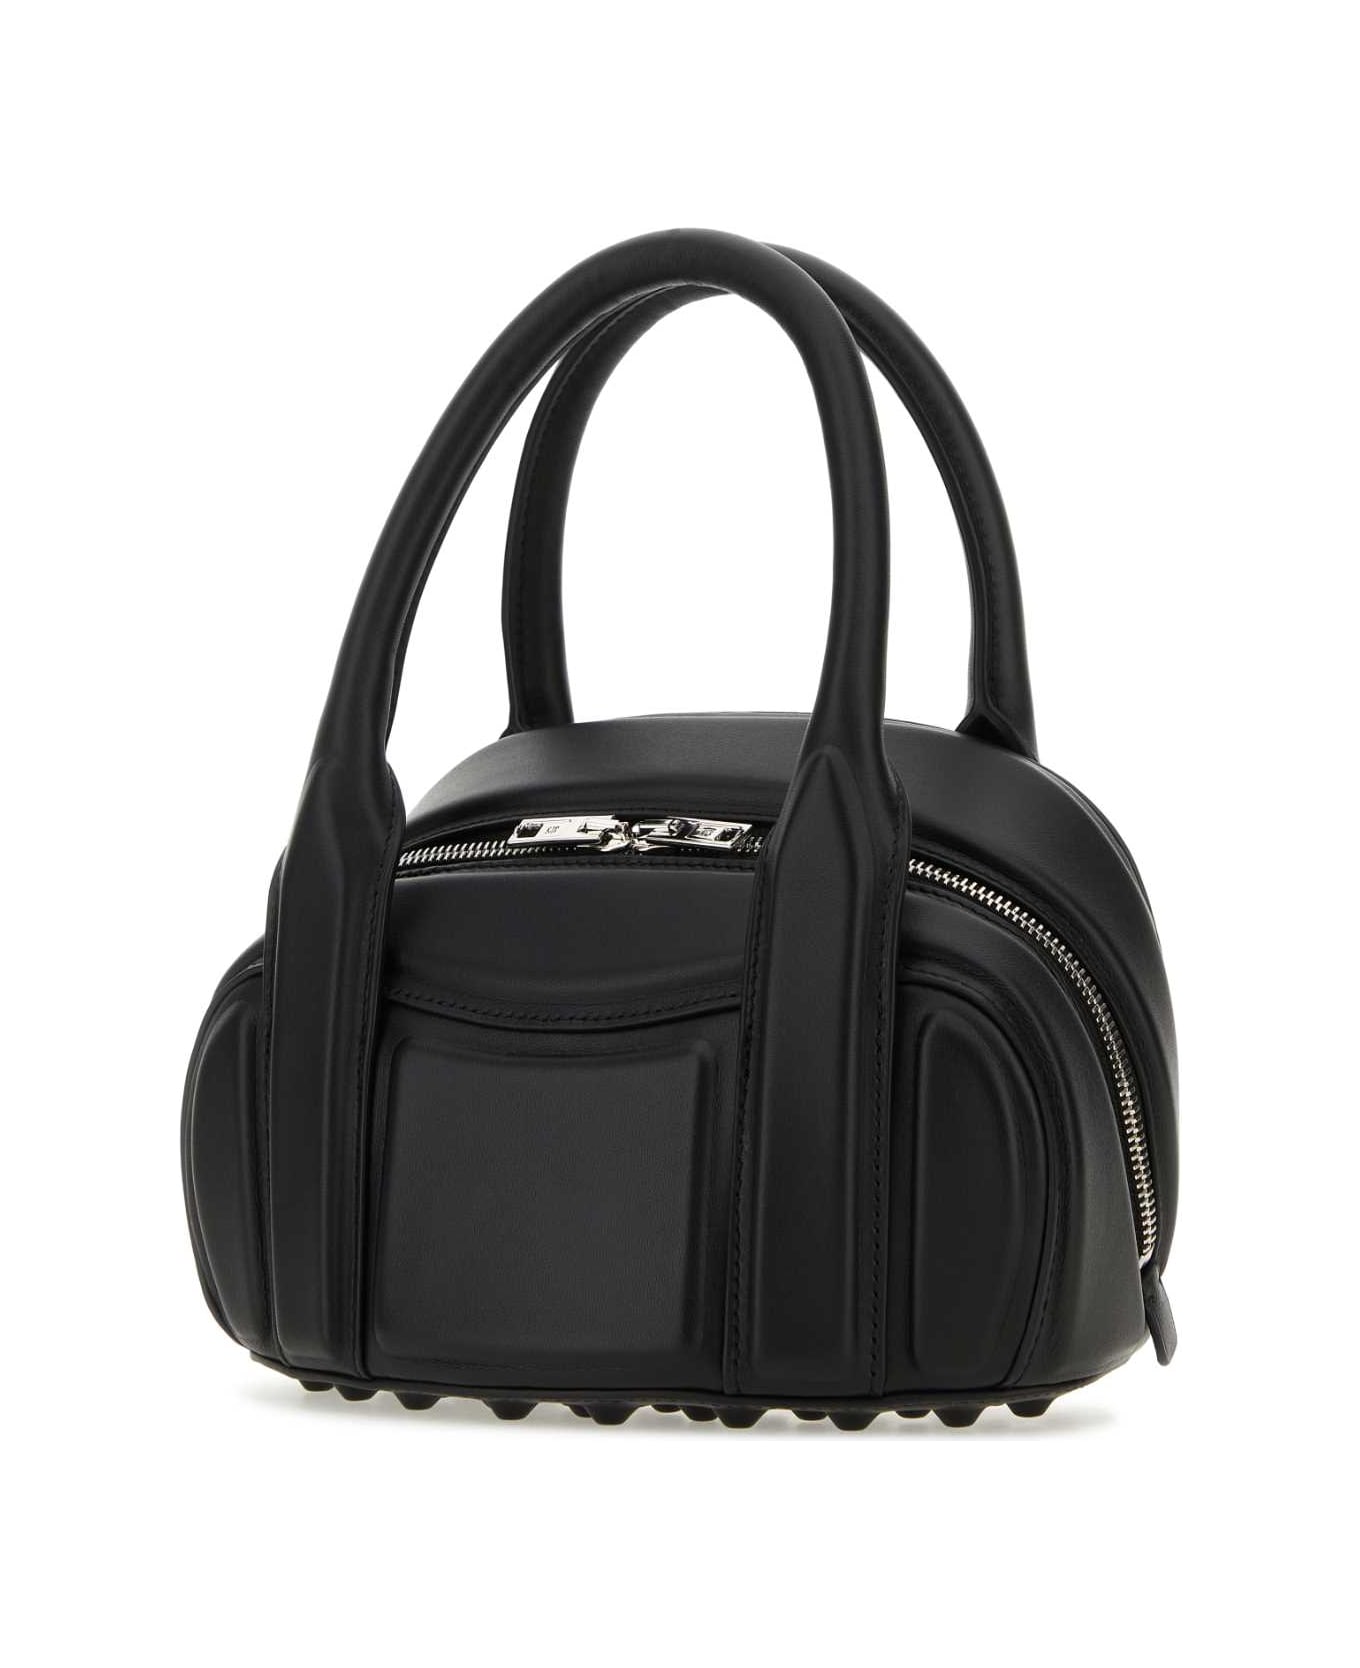 Alexander Wang Black Nappa Leather Roc Small Handbag - Black